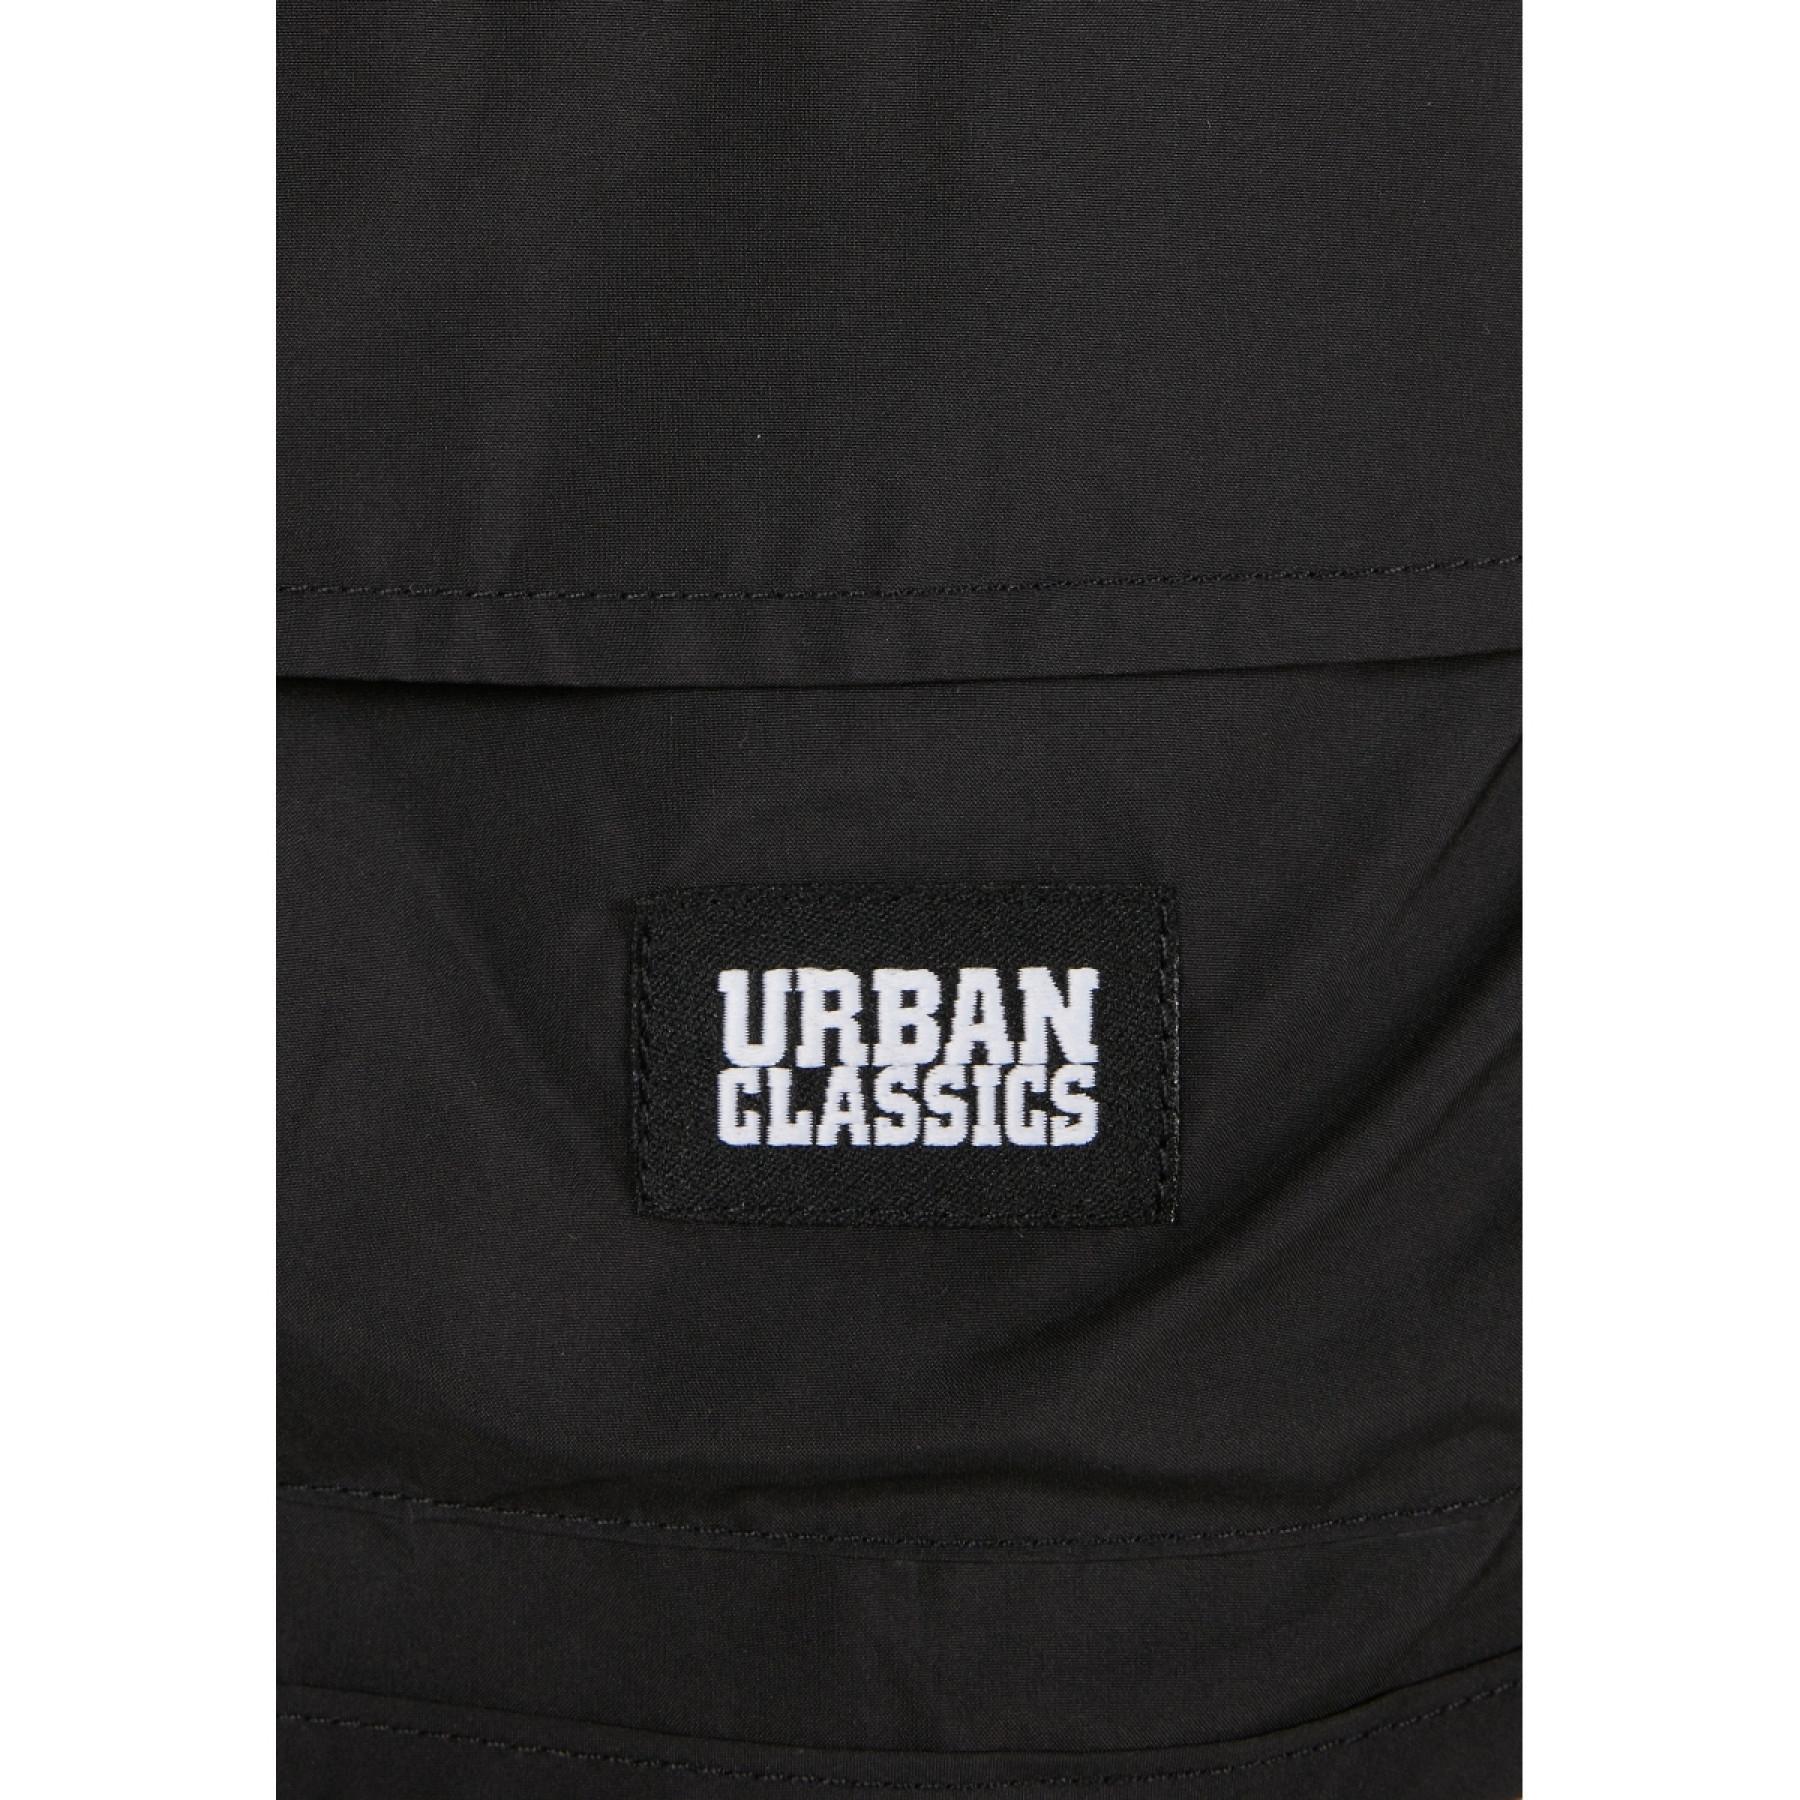 Jas Urban Classics light pocket